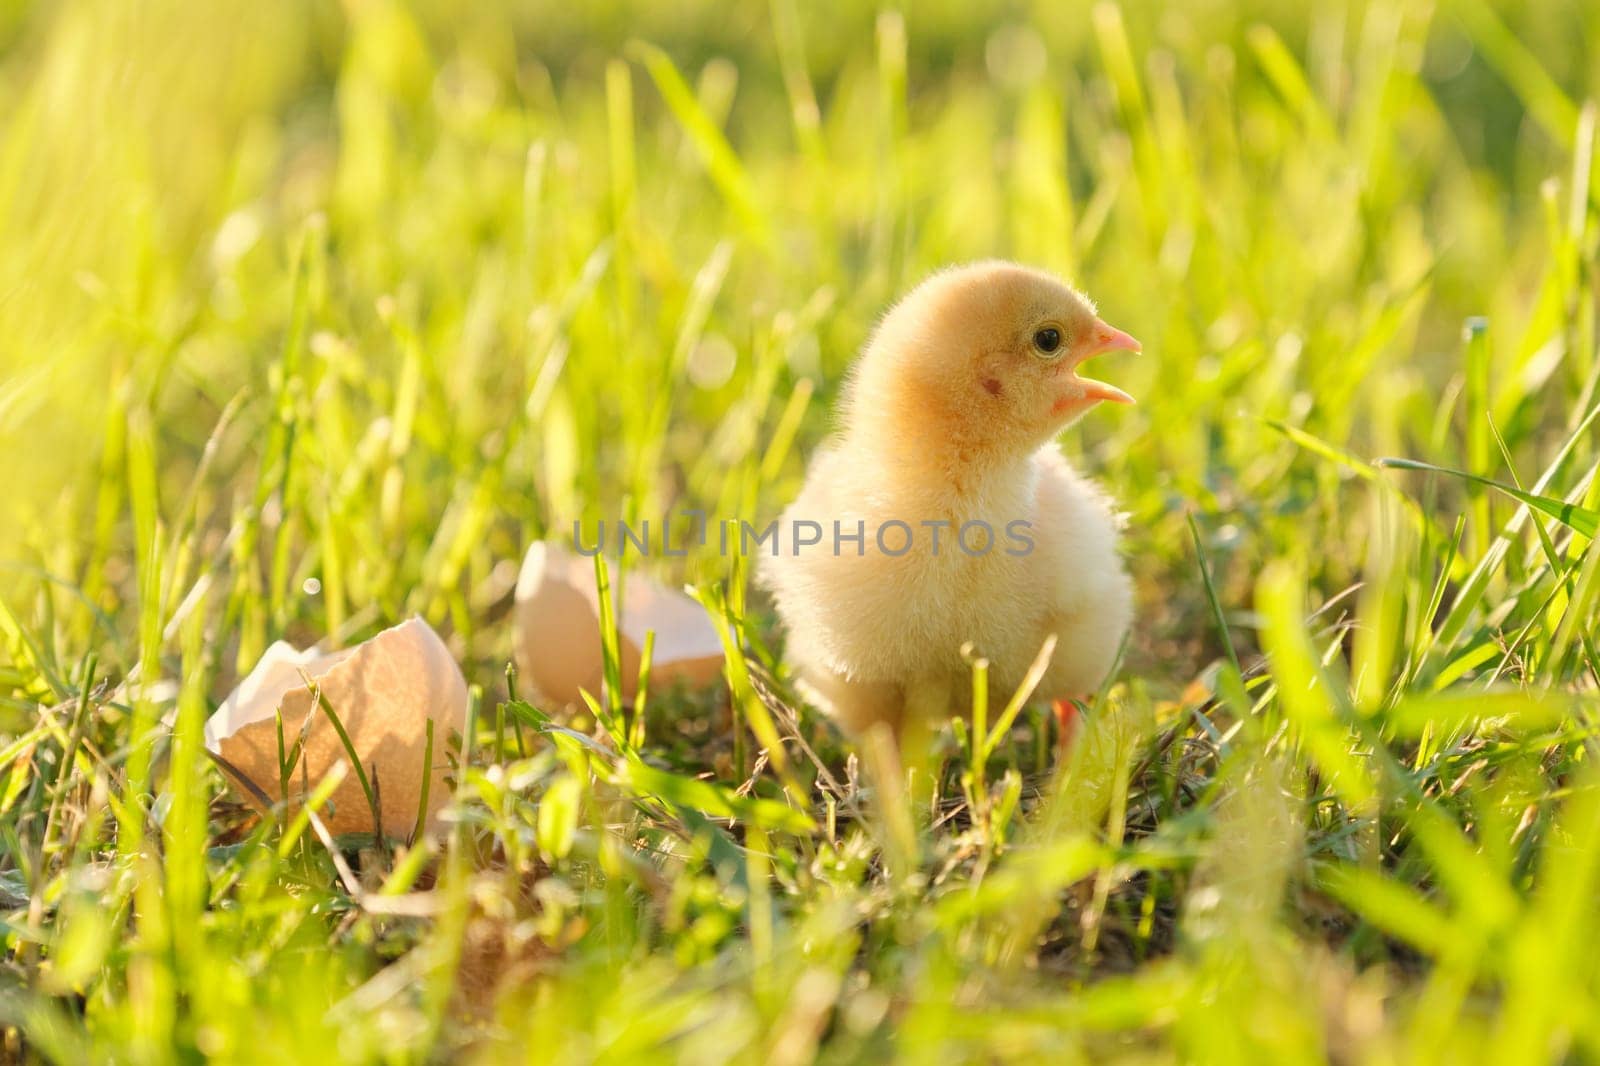 Newborn chicken with eggshell, green grass background in sunlight by VH-studio